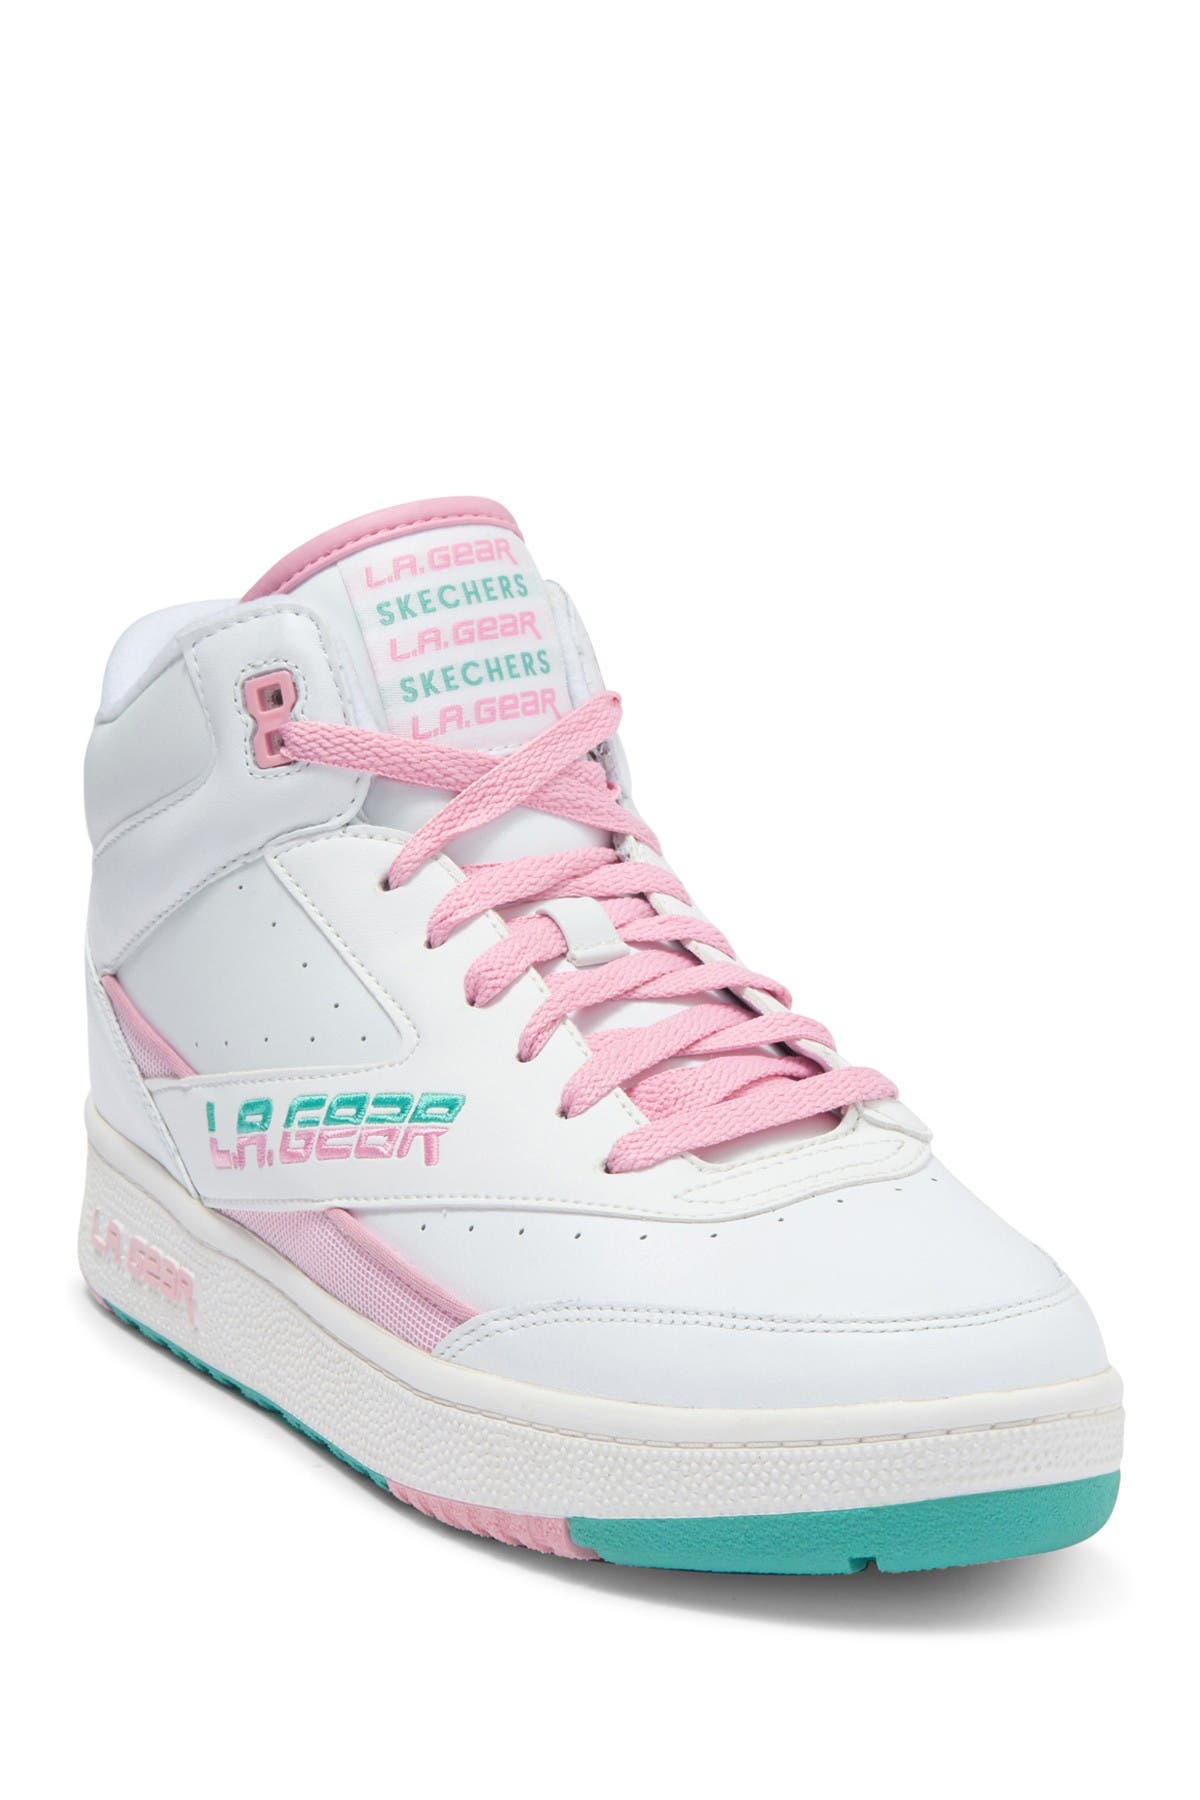 LA Gear Flame Hi Athletic Shoe - Little Kid - White / Pink / Blue